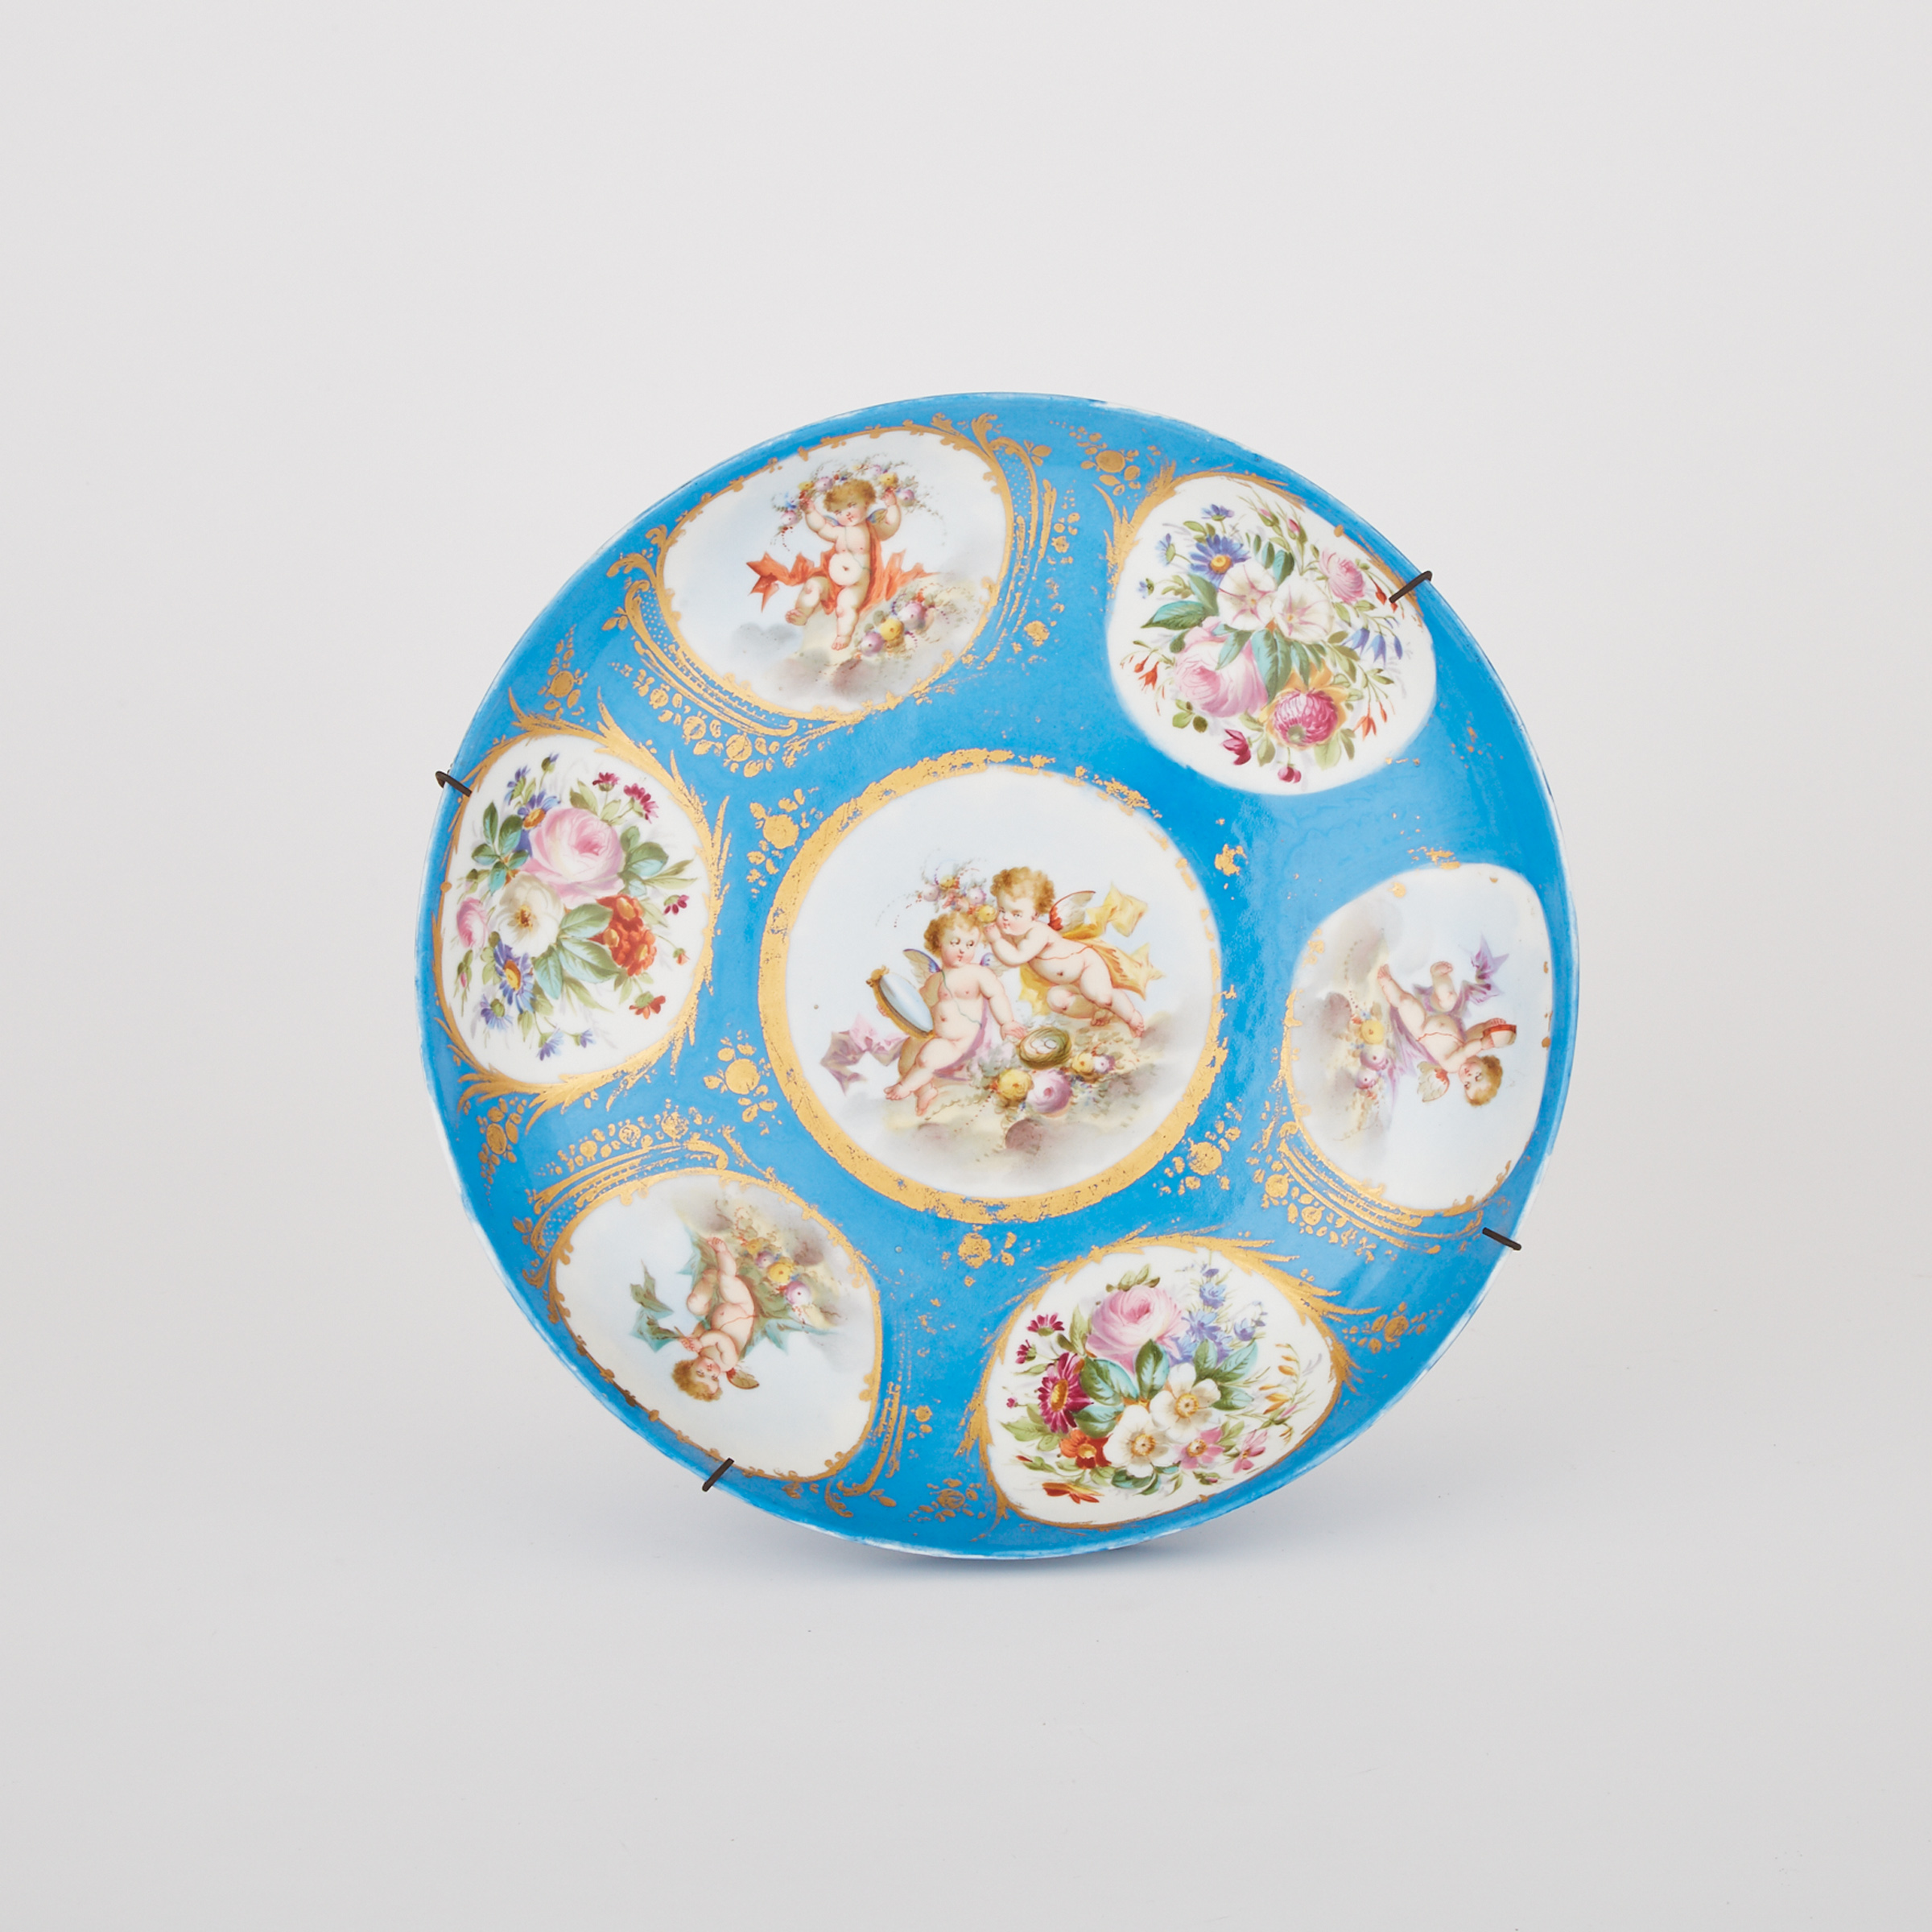 ‘Sèvres’ Bleu Céleste Ground Circular Dish, late 19th century